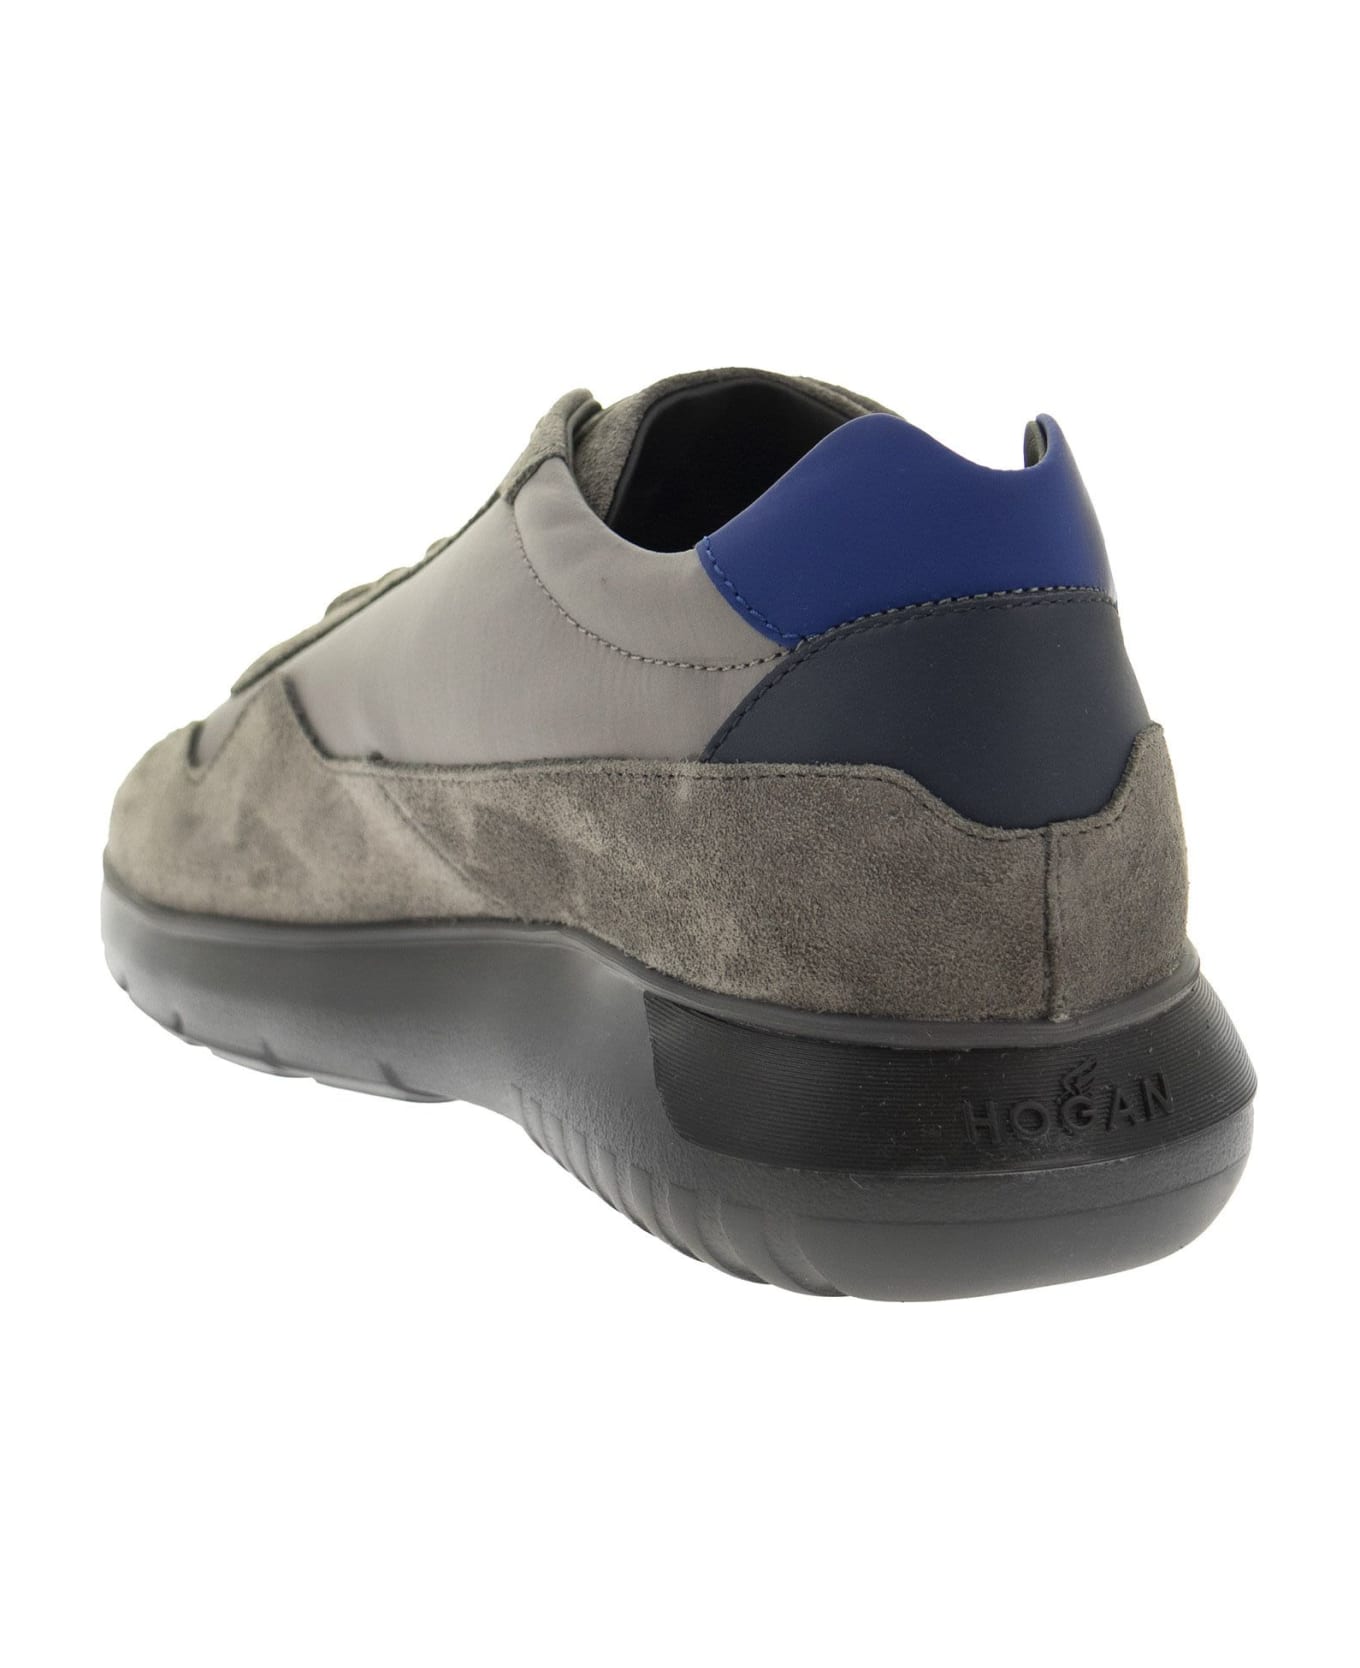 Hogan Interactive 3 Sneakers - Grey/blue